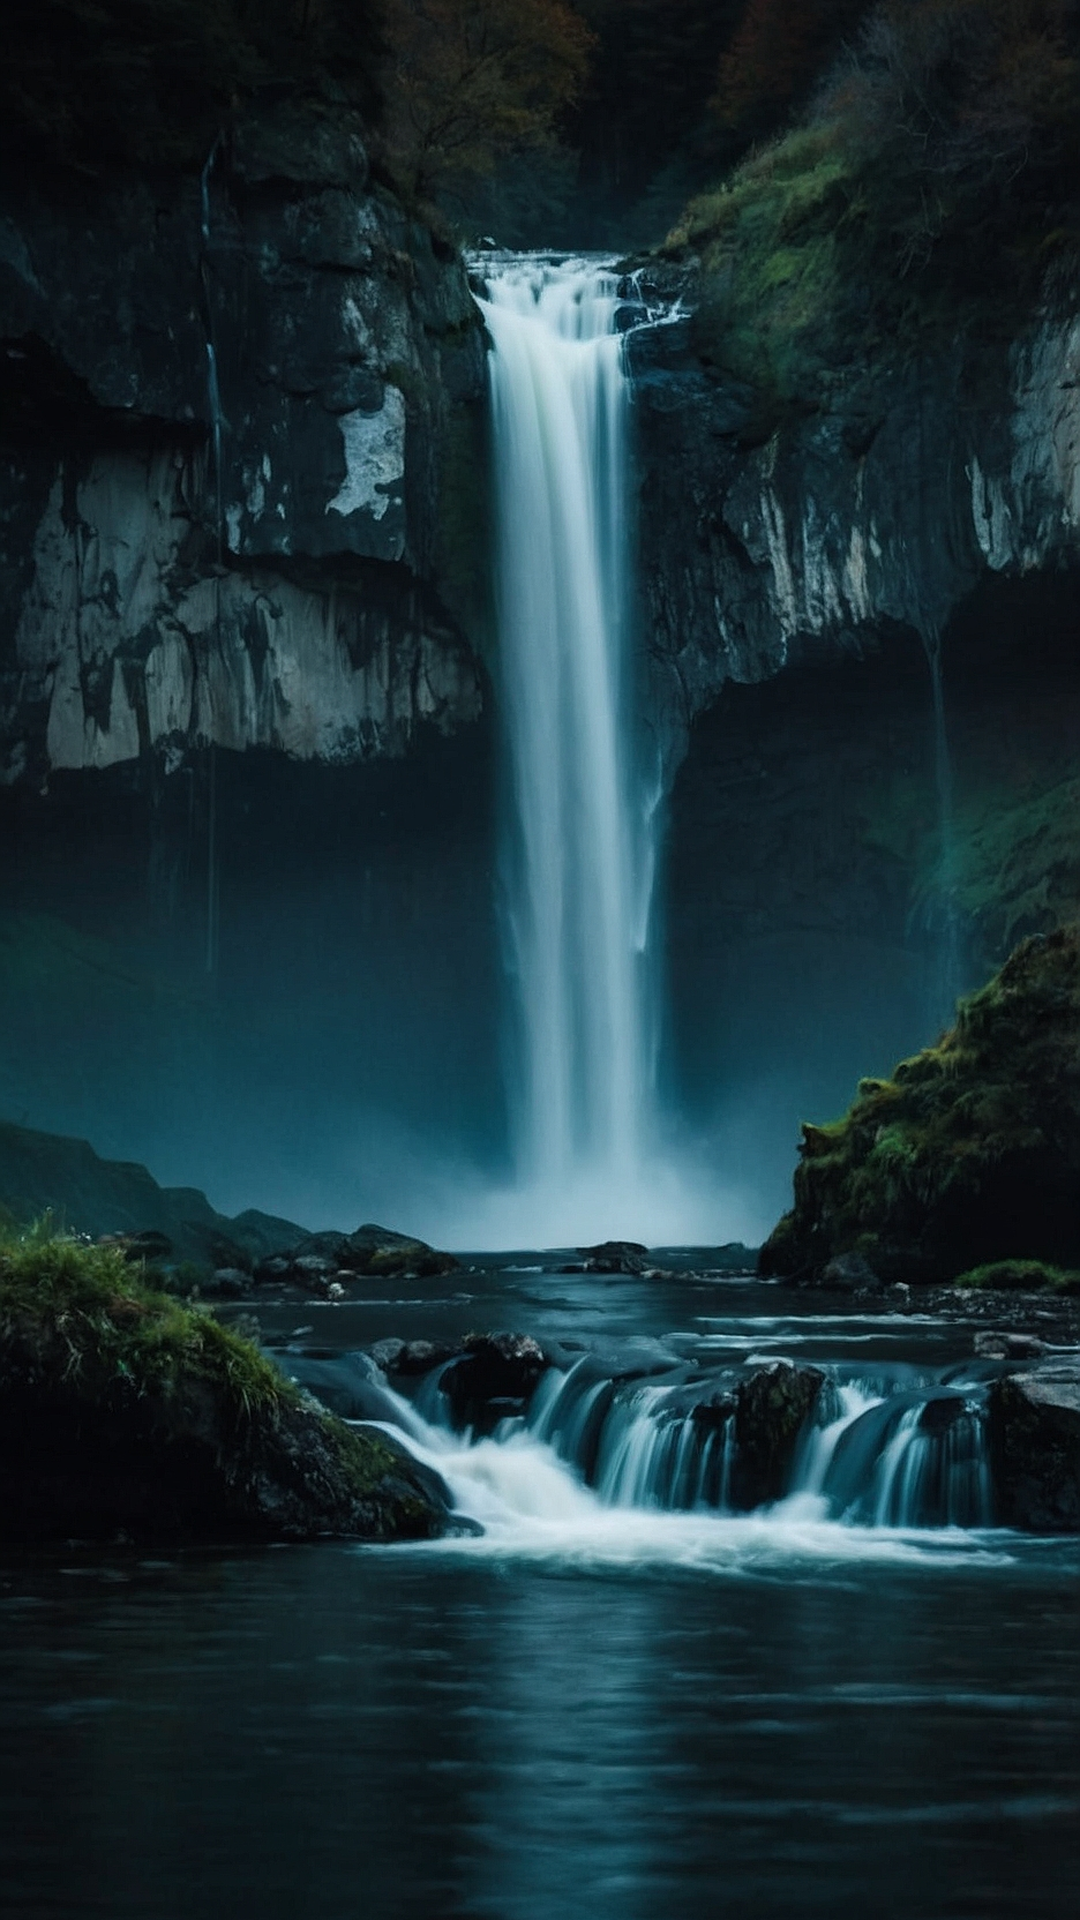 Lush Cascades: Refreshing Waterfall Wallpaper Options